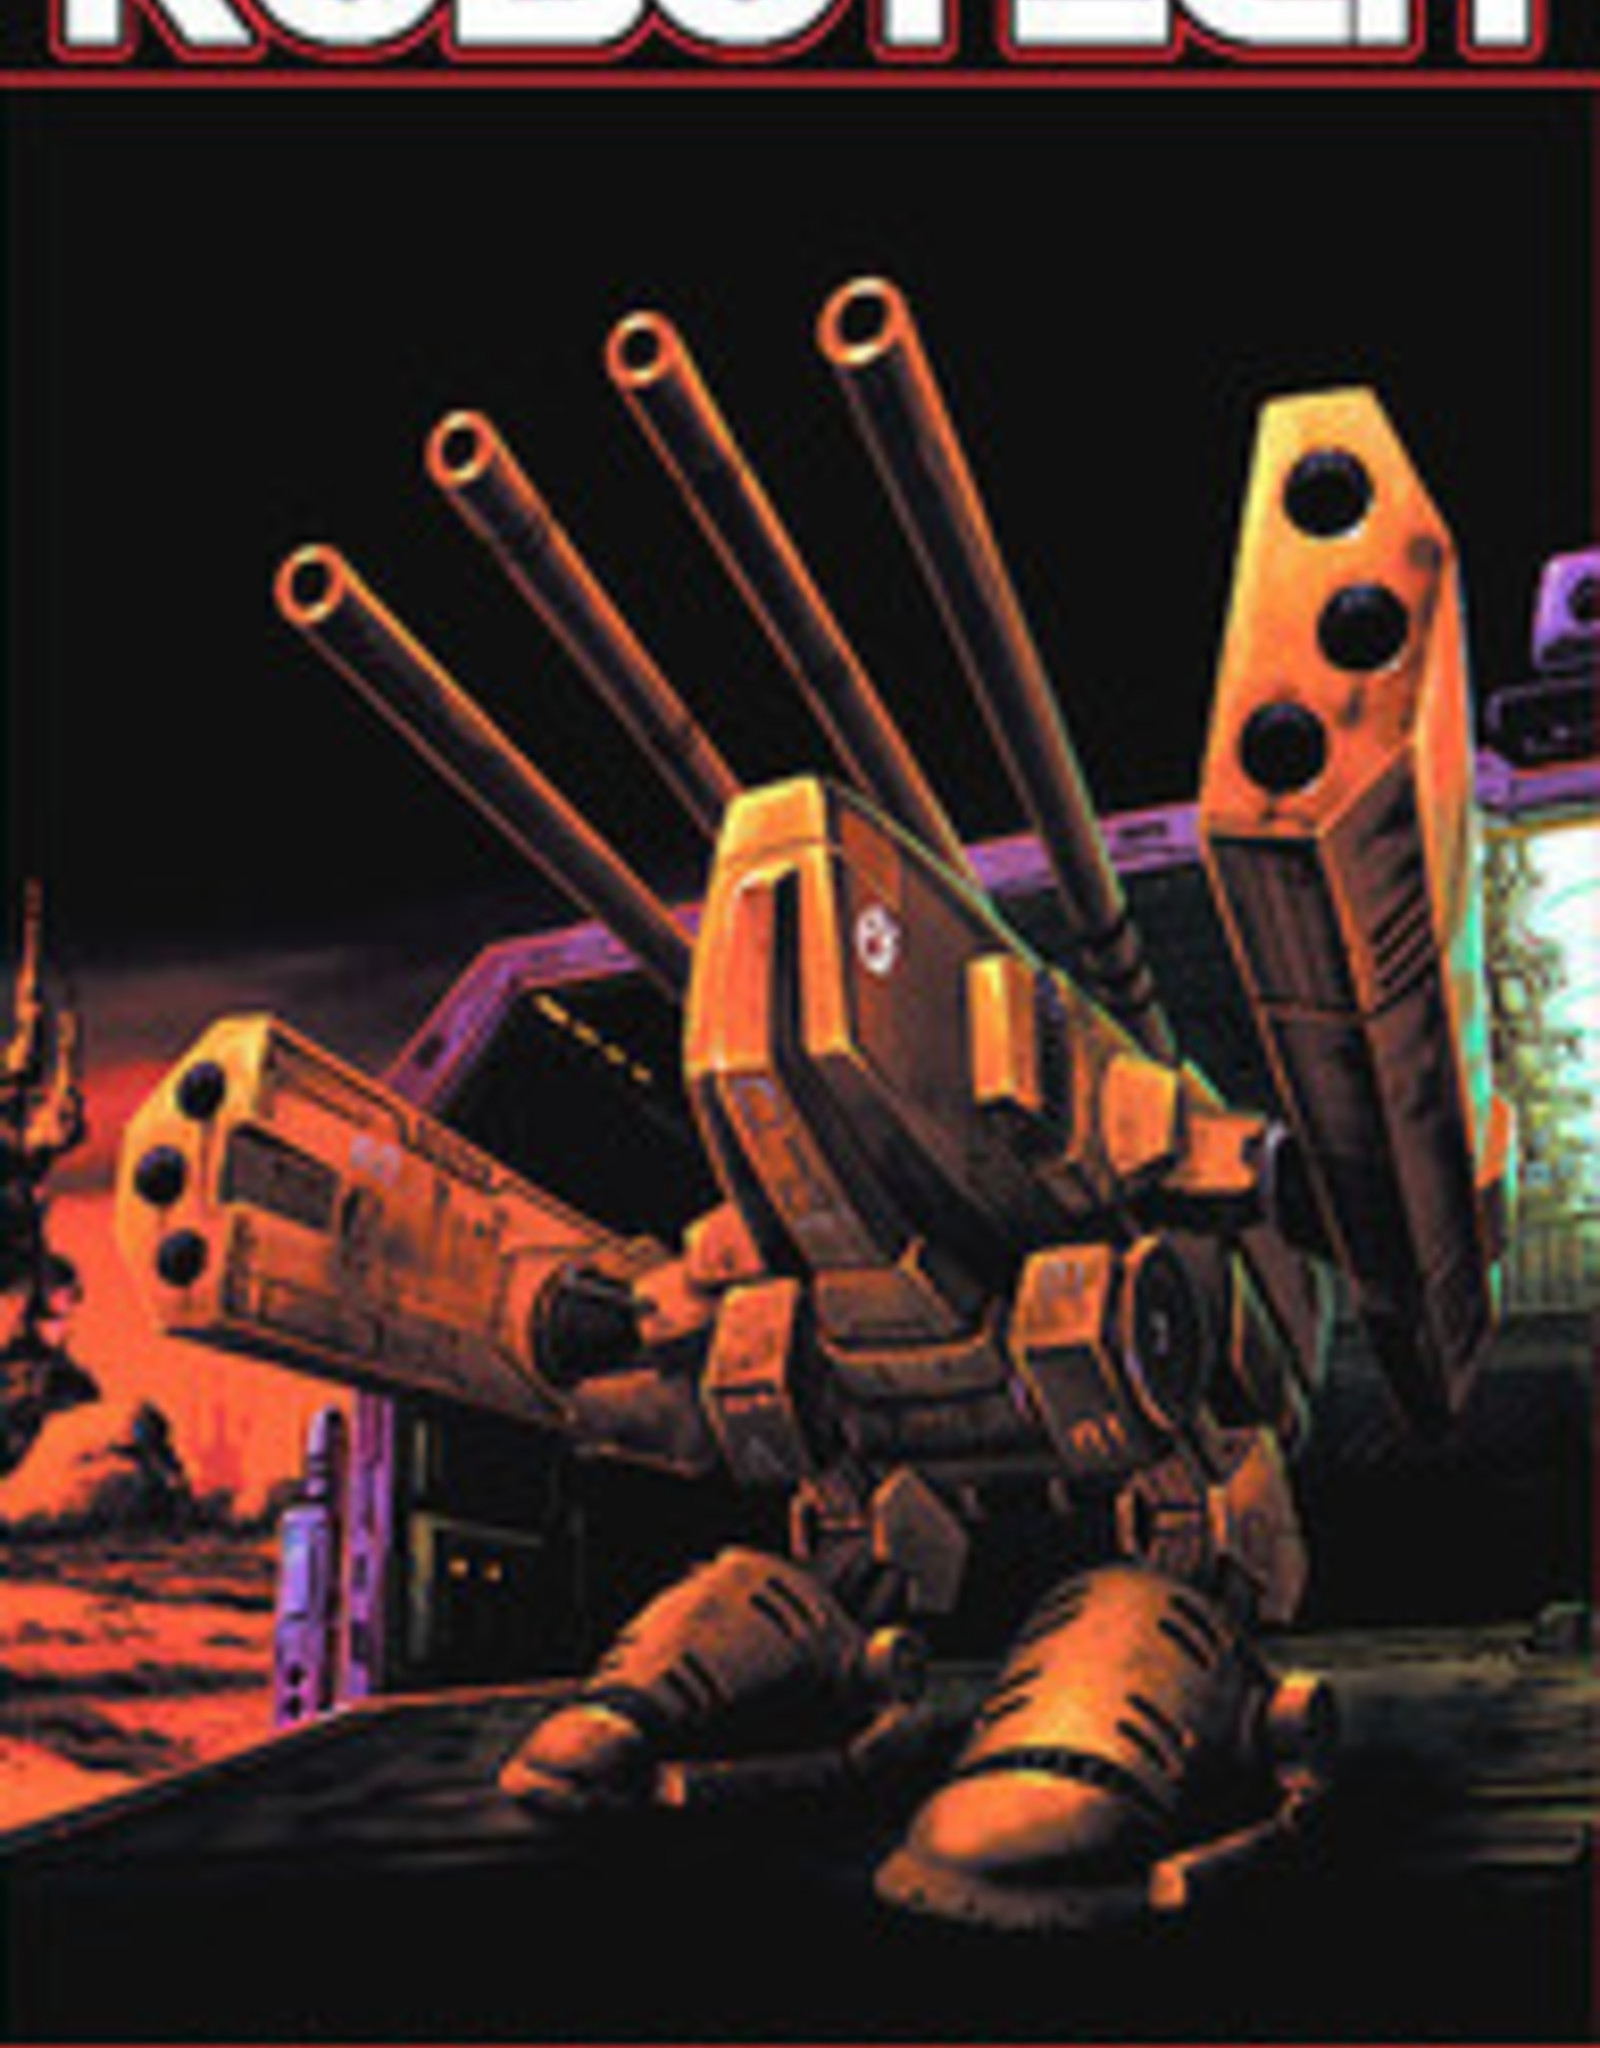 Wildstorm Robotech The Macross Saga Volume 04